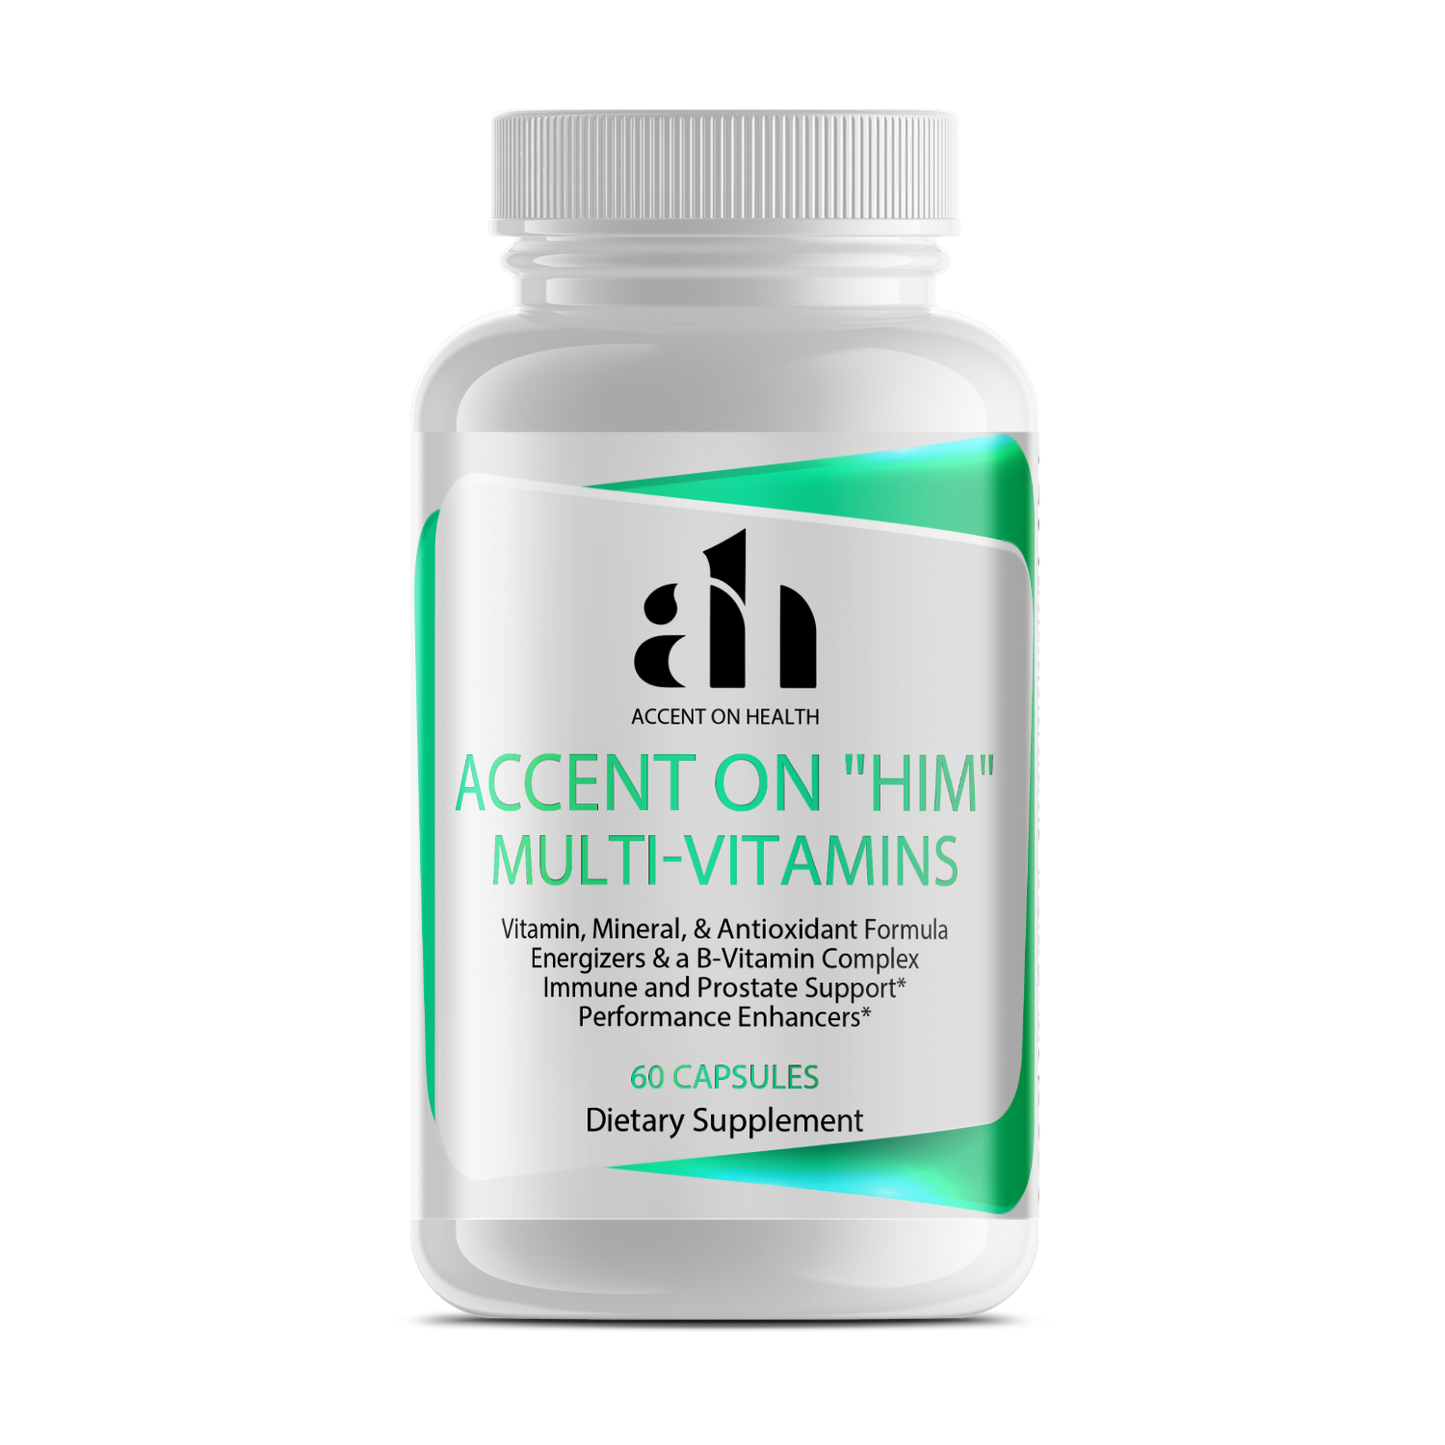 Accent on "Him" Multi-Vitamins